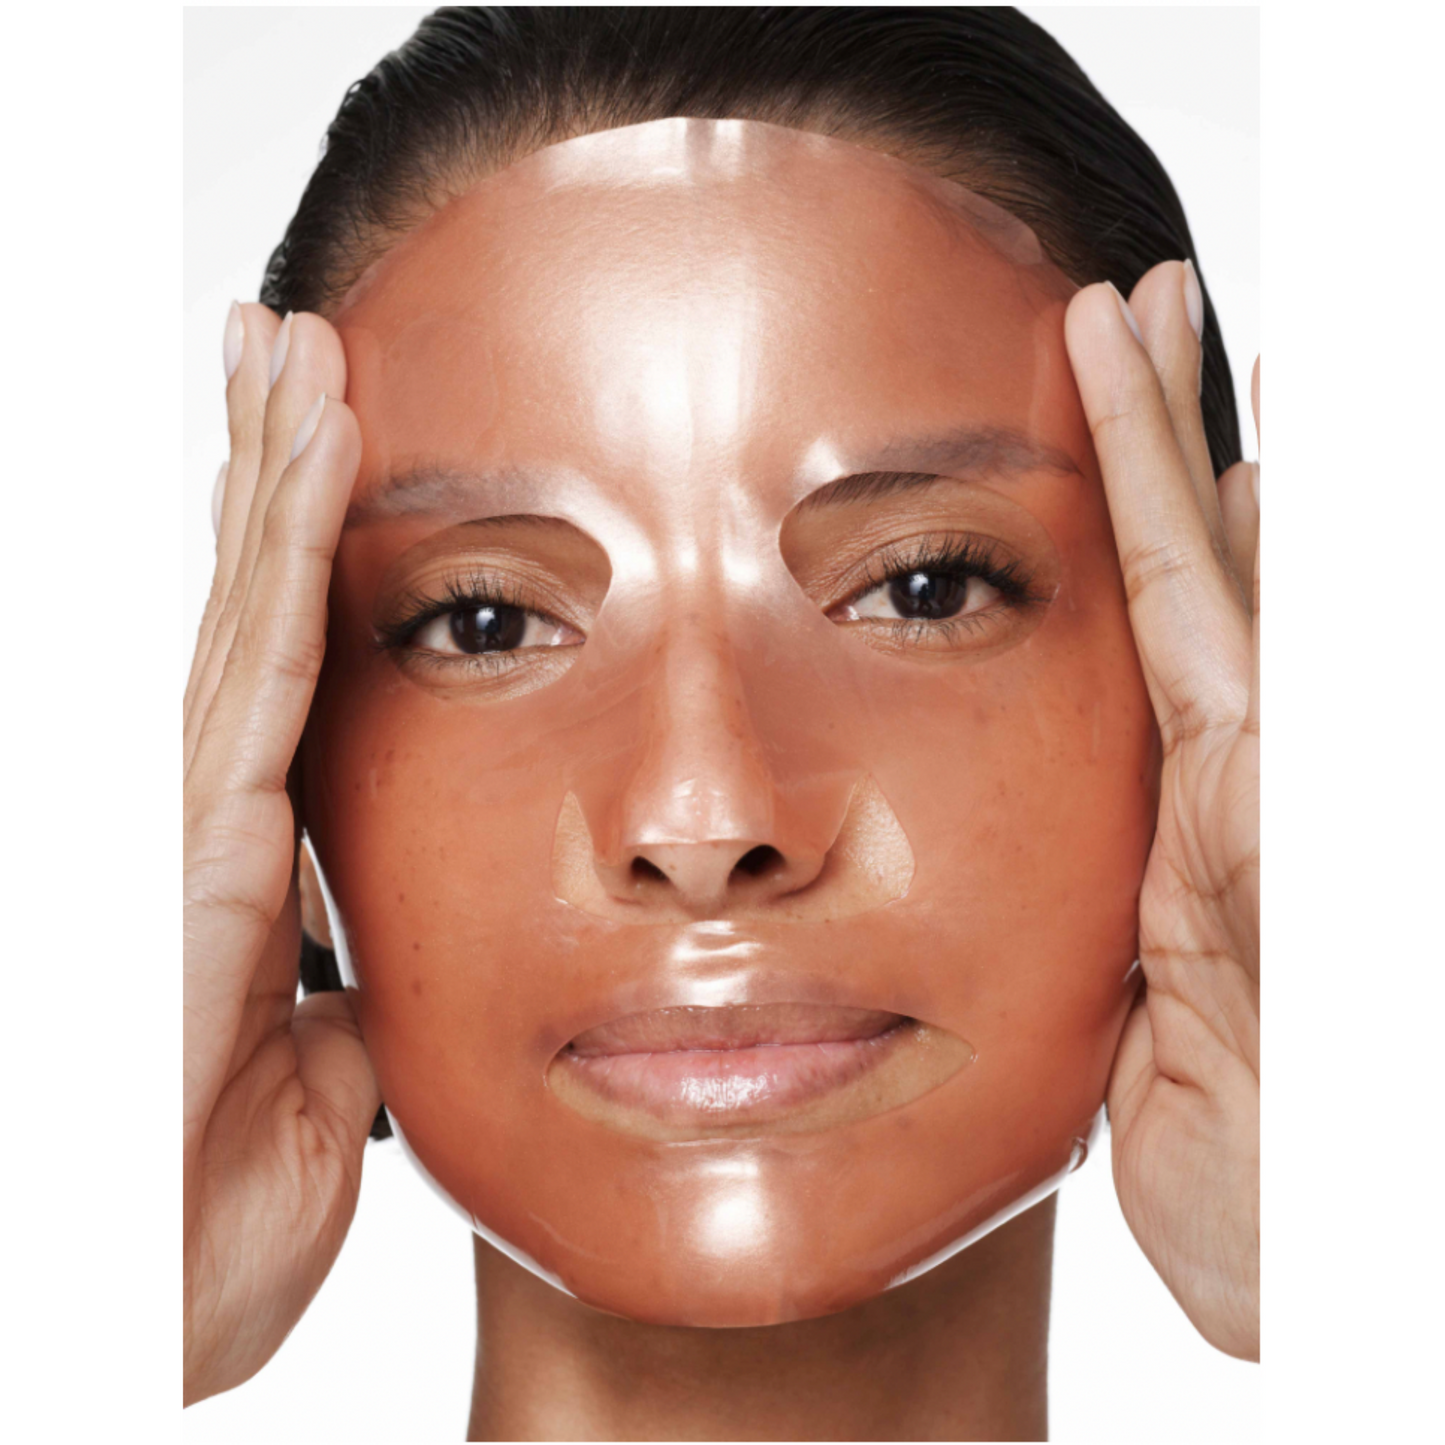 Rose Gold Facial Treatment Mask: Brightening Sheet Mask